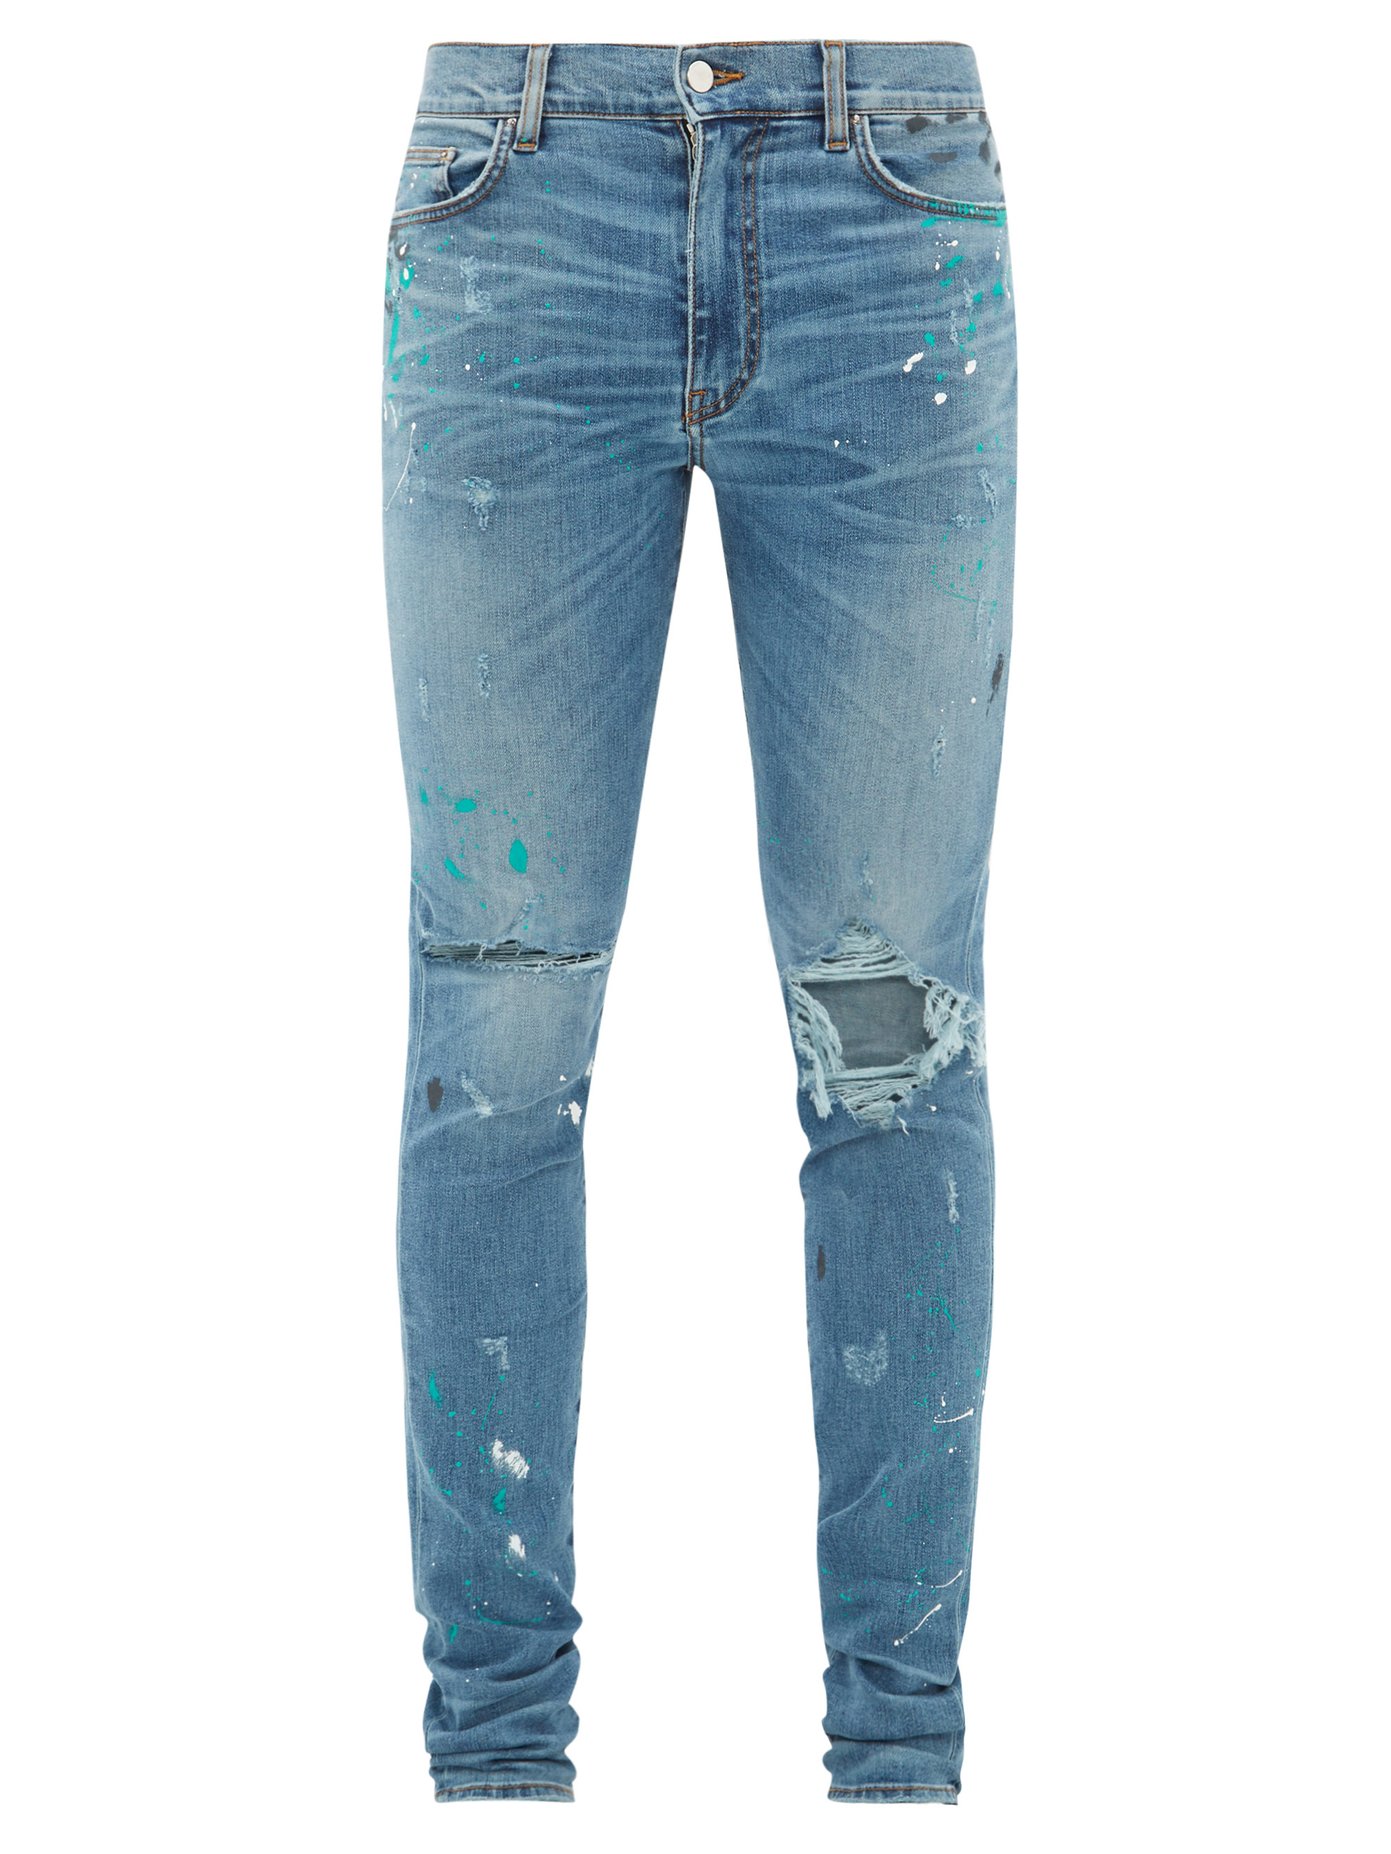 amiri jeans canada